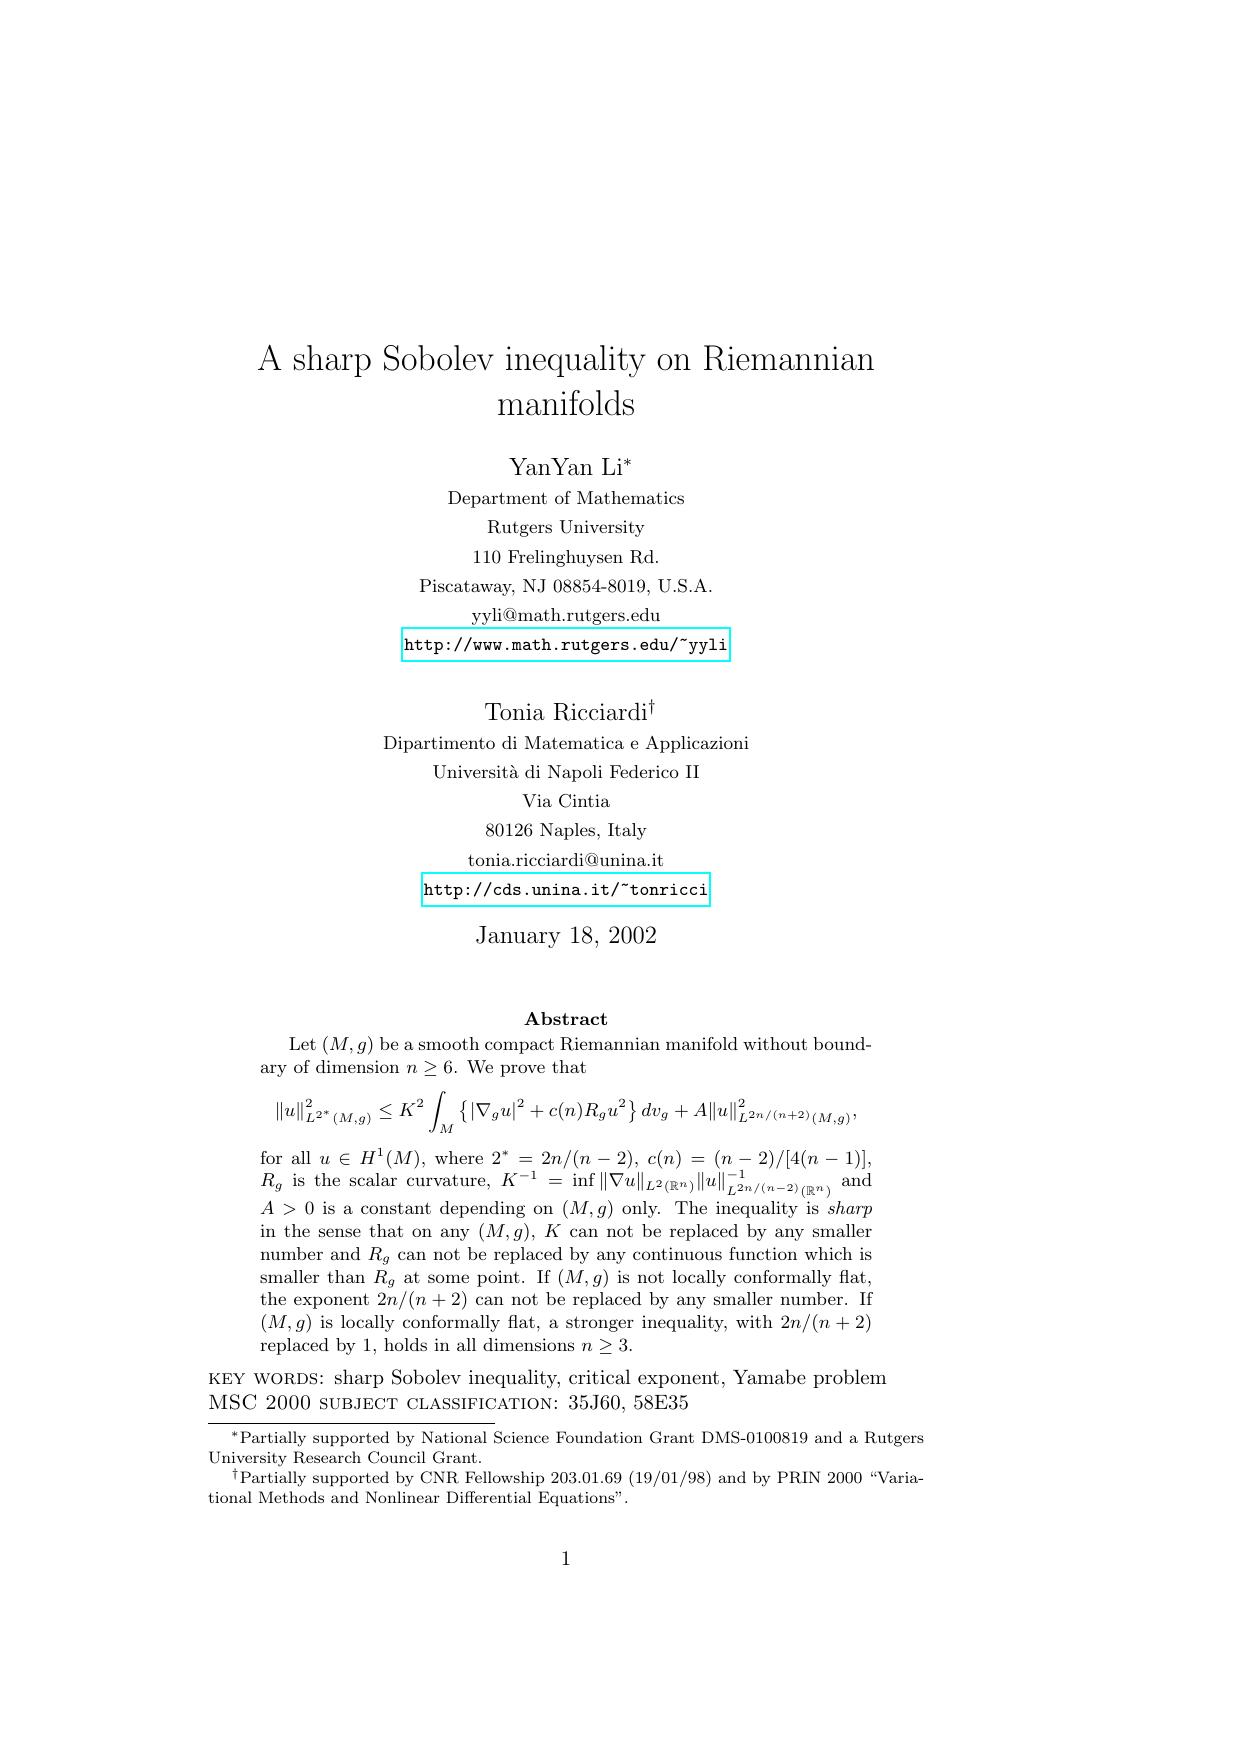 A sharp Sobolev inequality on Riemannian manifolds - Paper